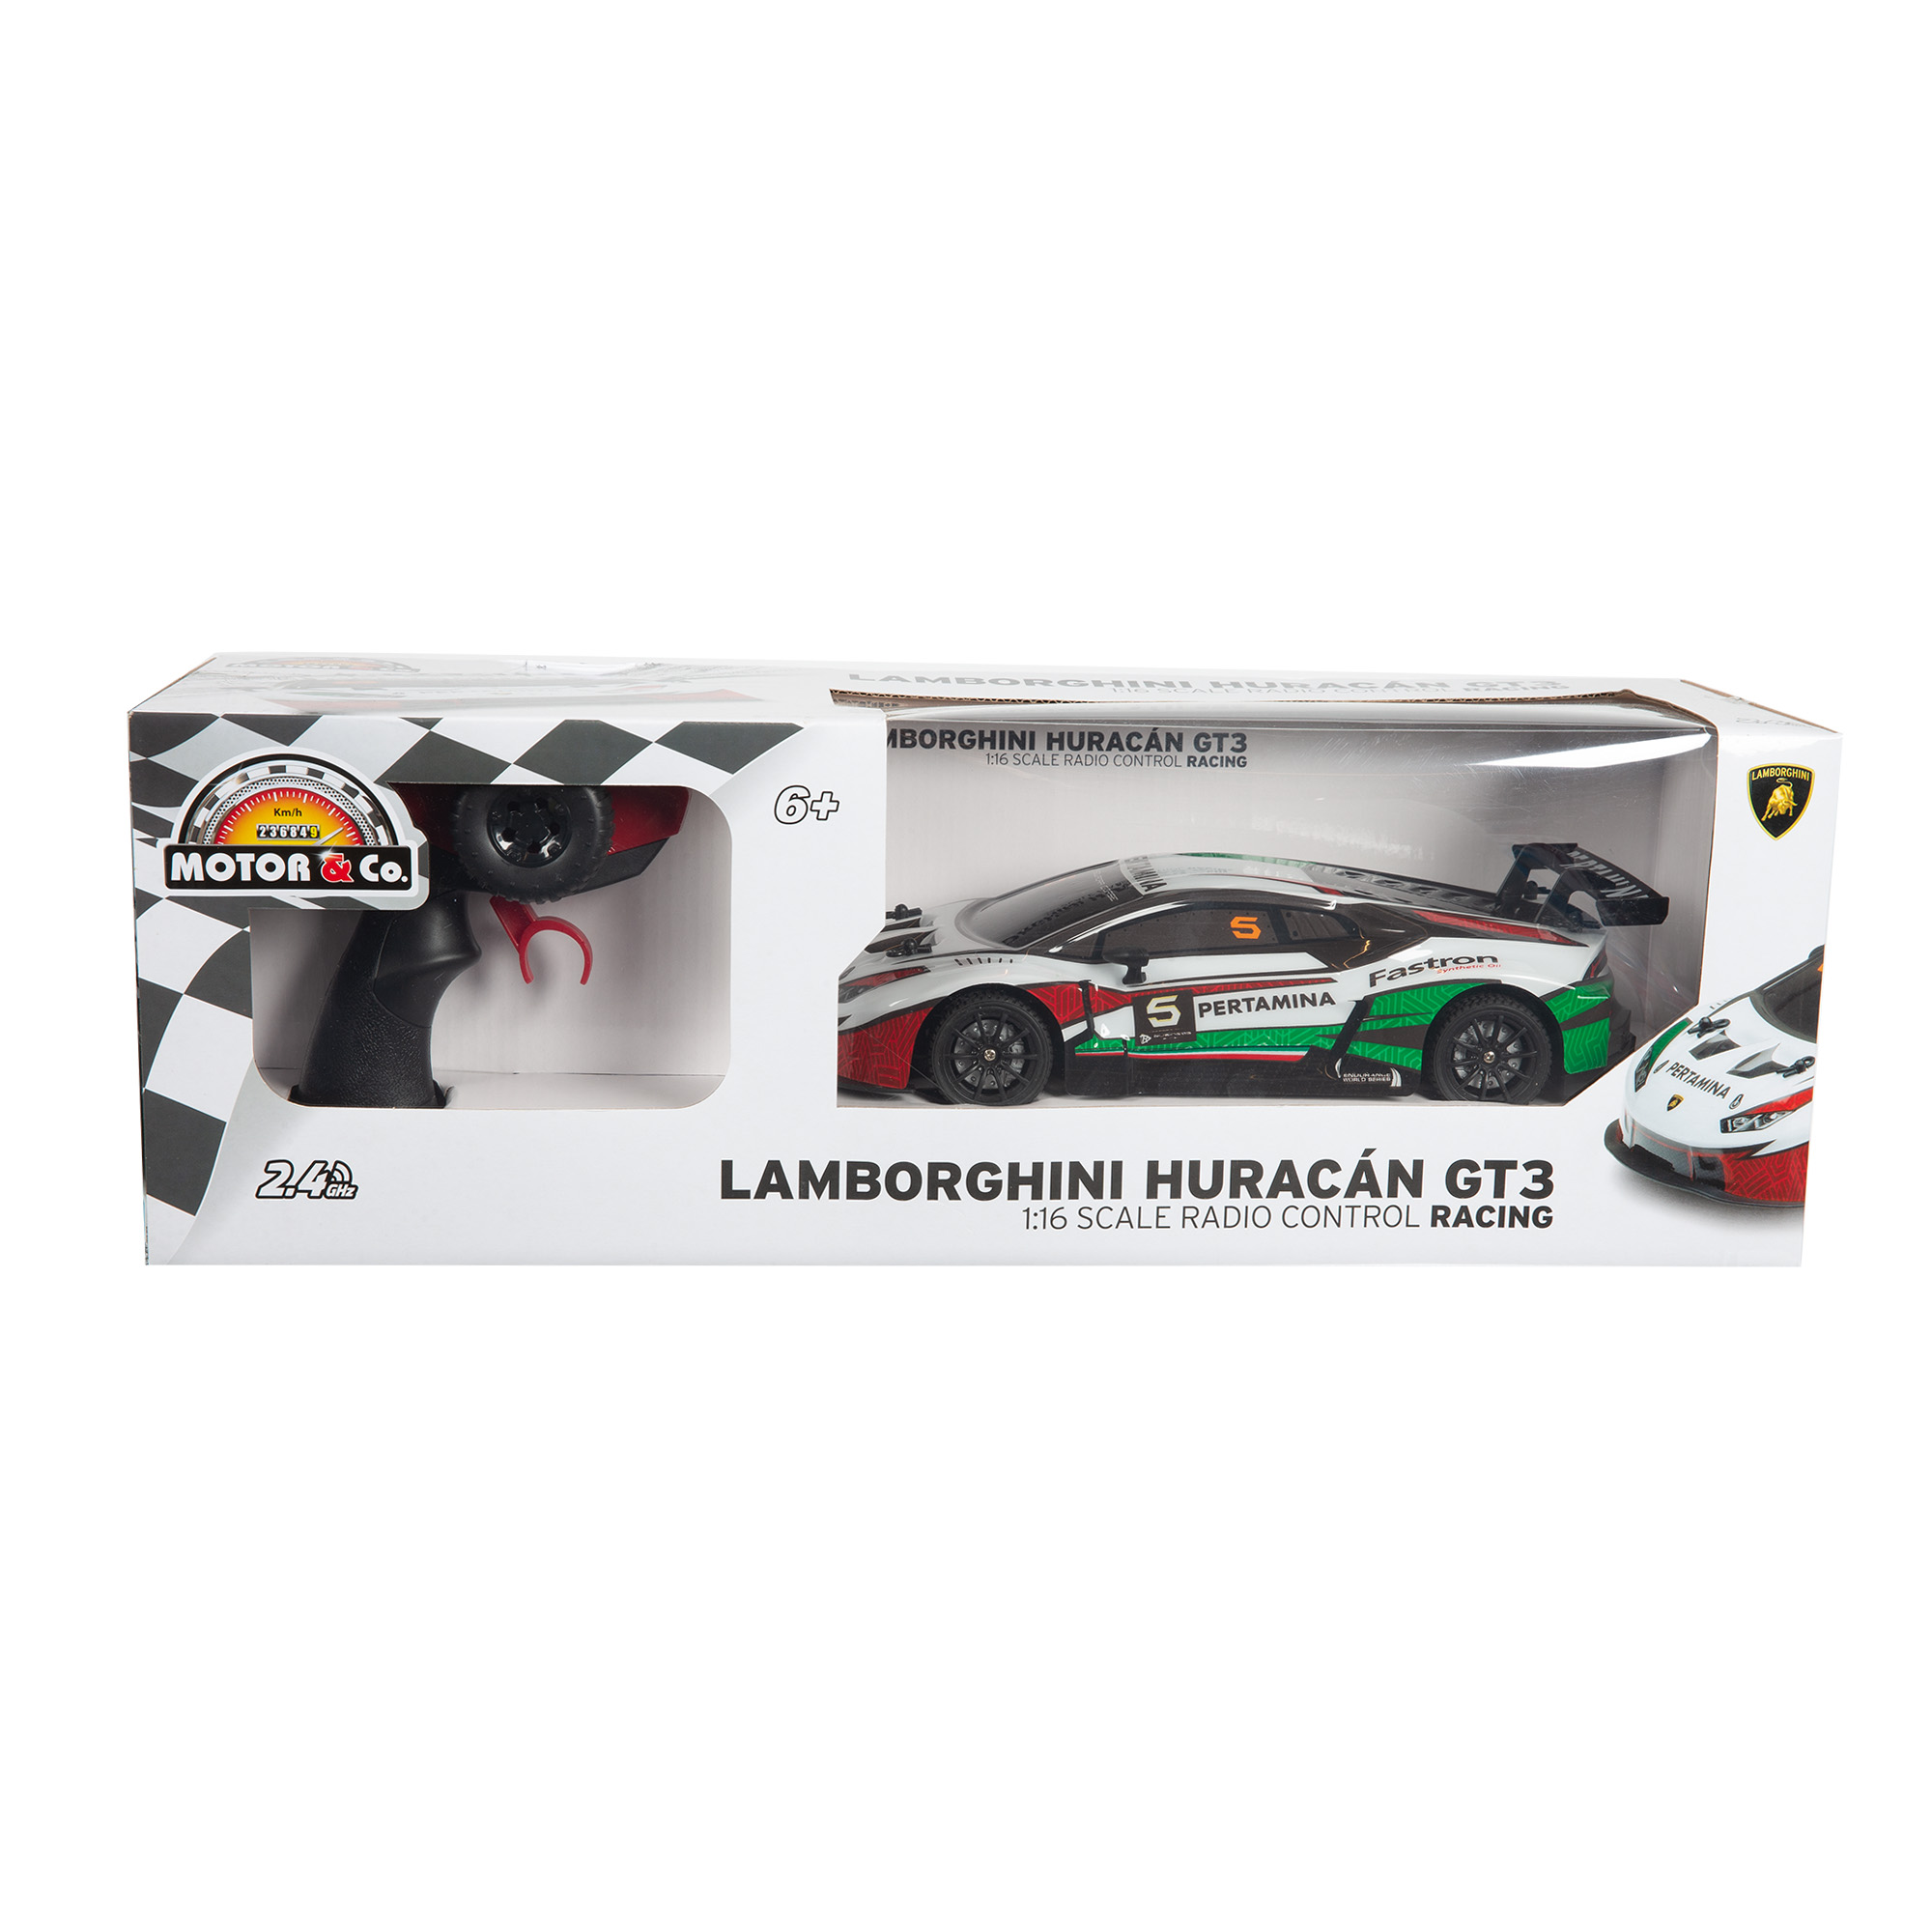 Lamborghini Huracan GT3 radiocomandata scala 1:16 - Motor&Co